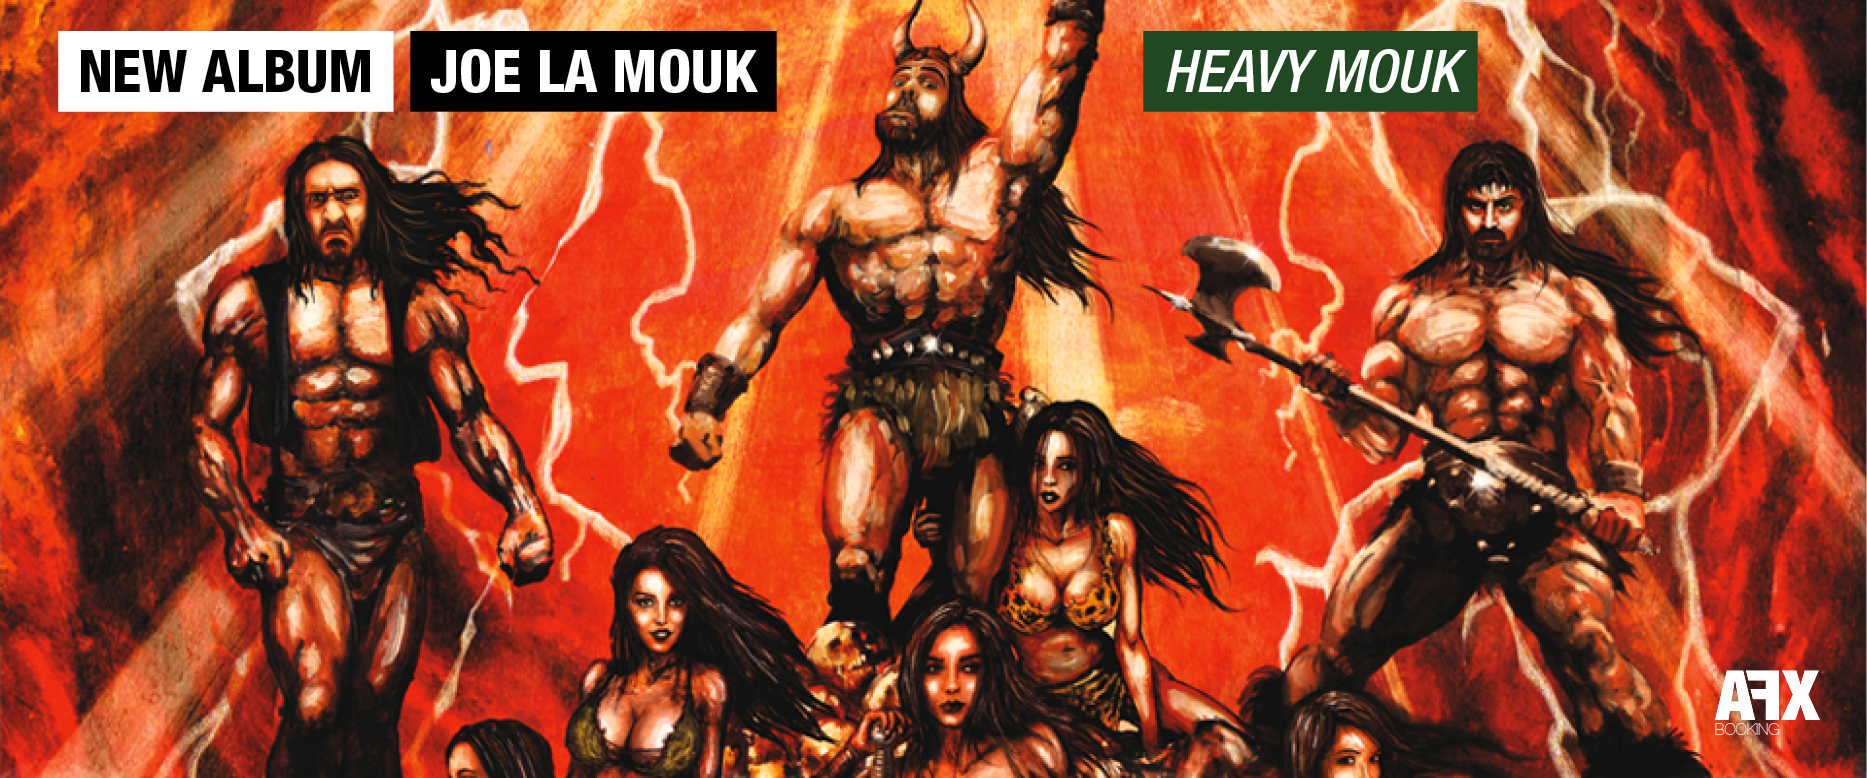 JOE LA MOUK : New album “HEAVY MOUK”